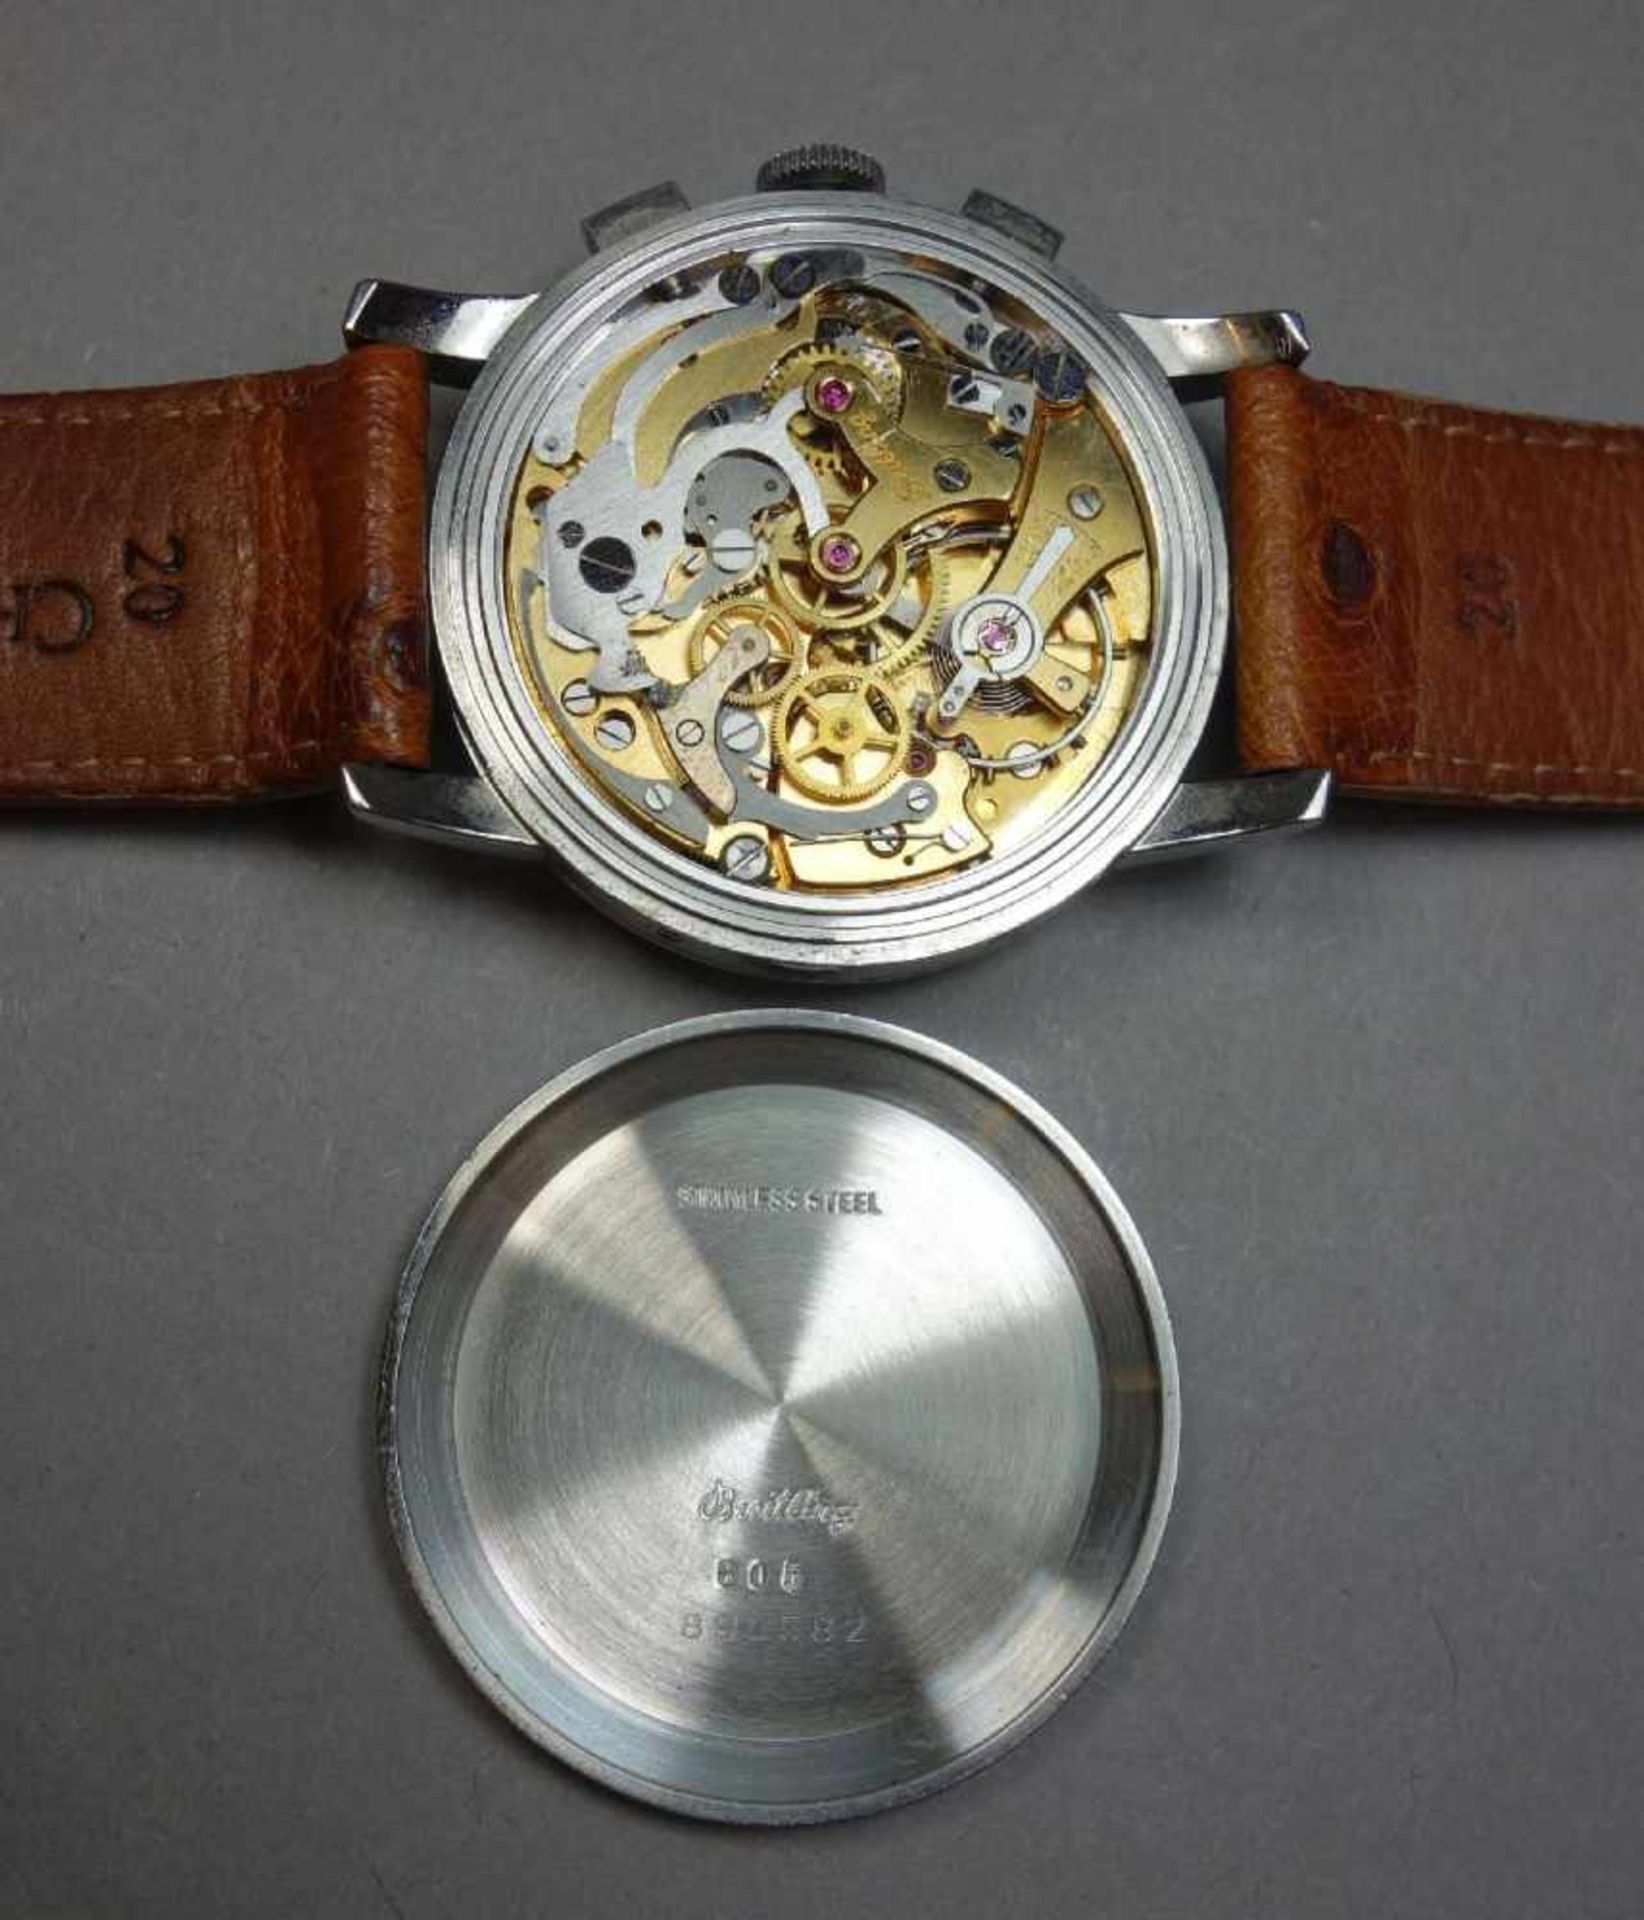 BREITLING VINTAGE ARMBANDUHR / CHRONOGRAPH MIT VOLLKALENDER / wristwatch, Handaufzug, Manufaktur - Image 7 of 10